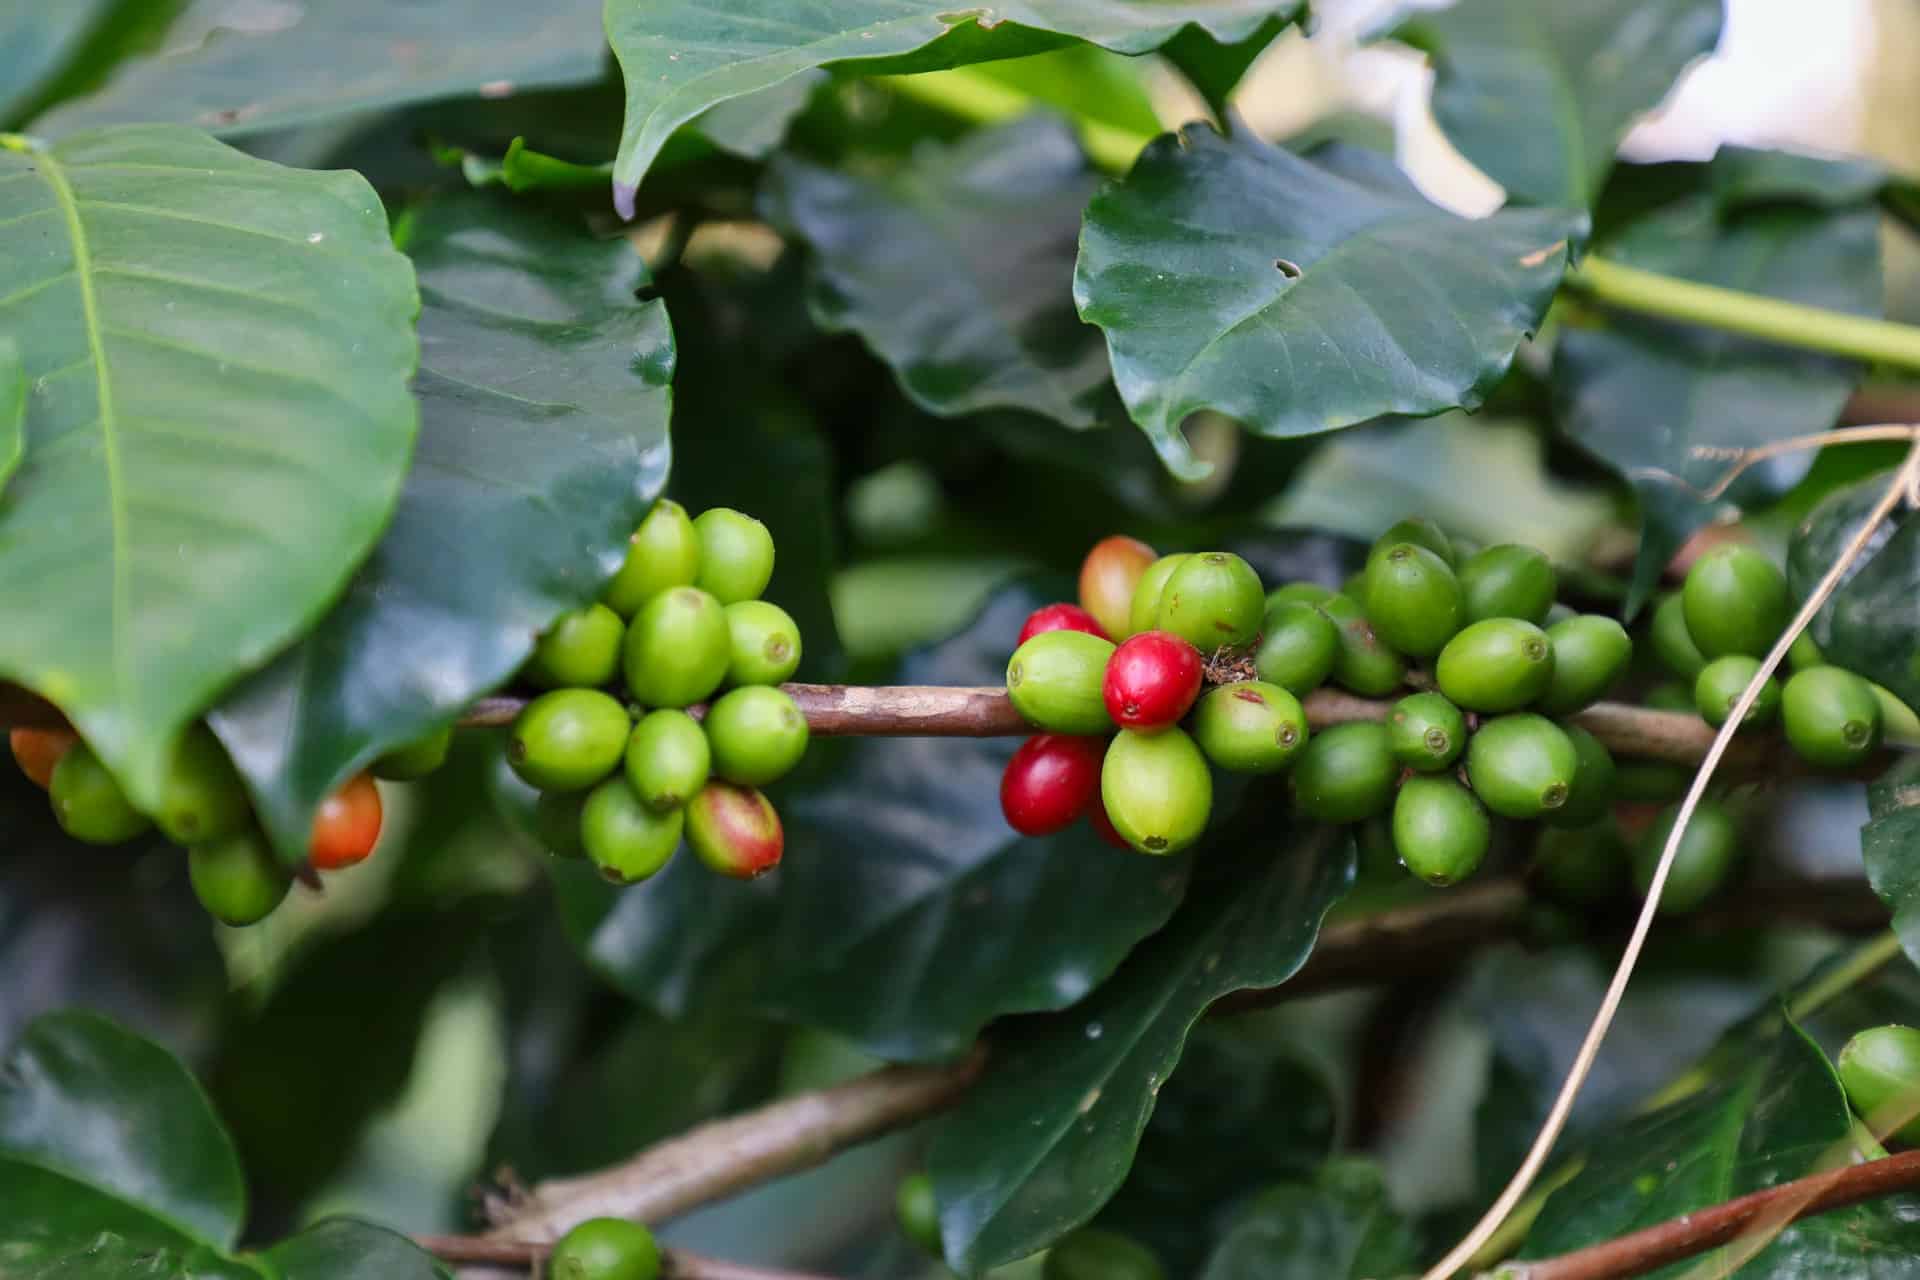 Coffee green beans